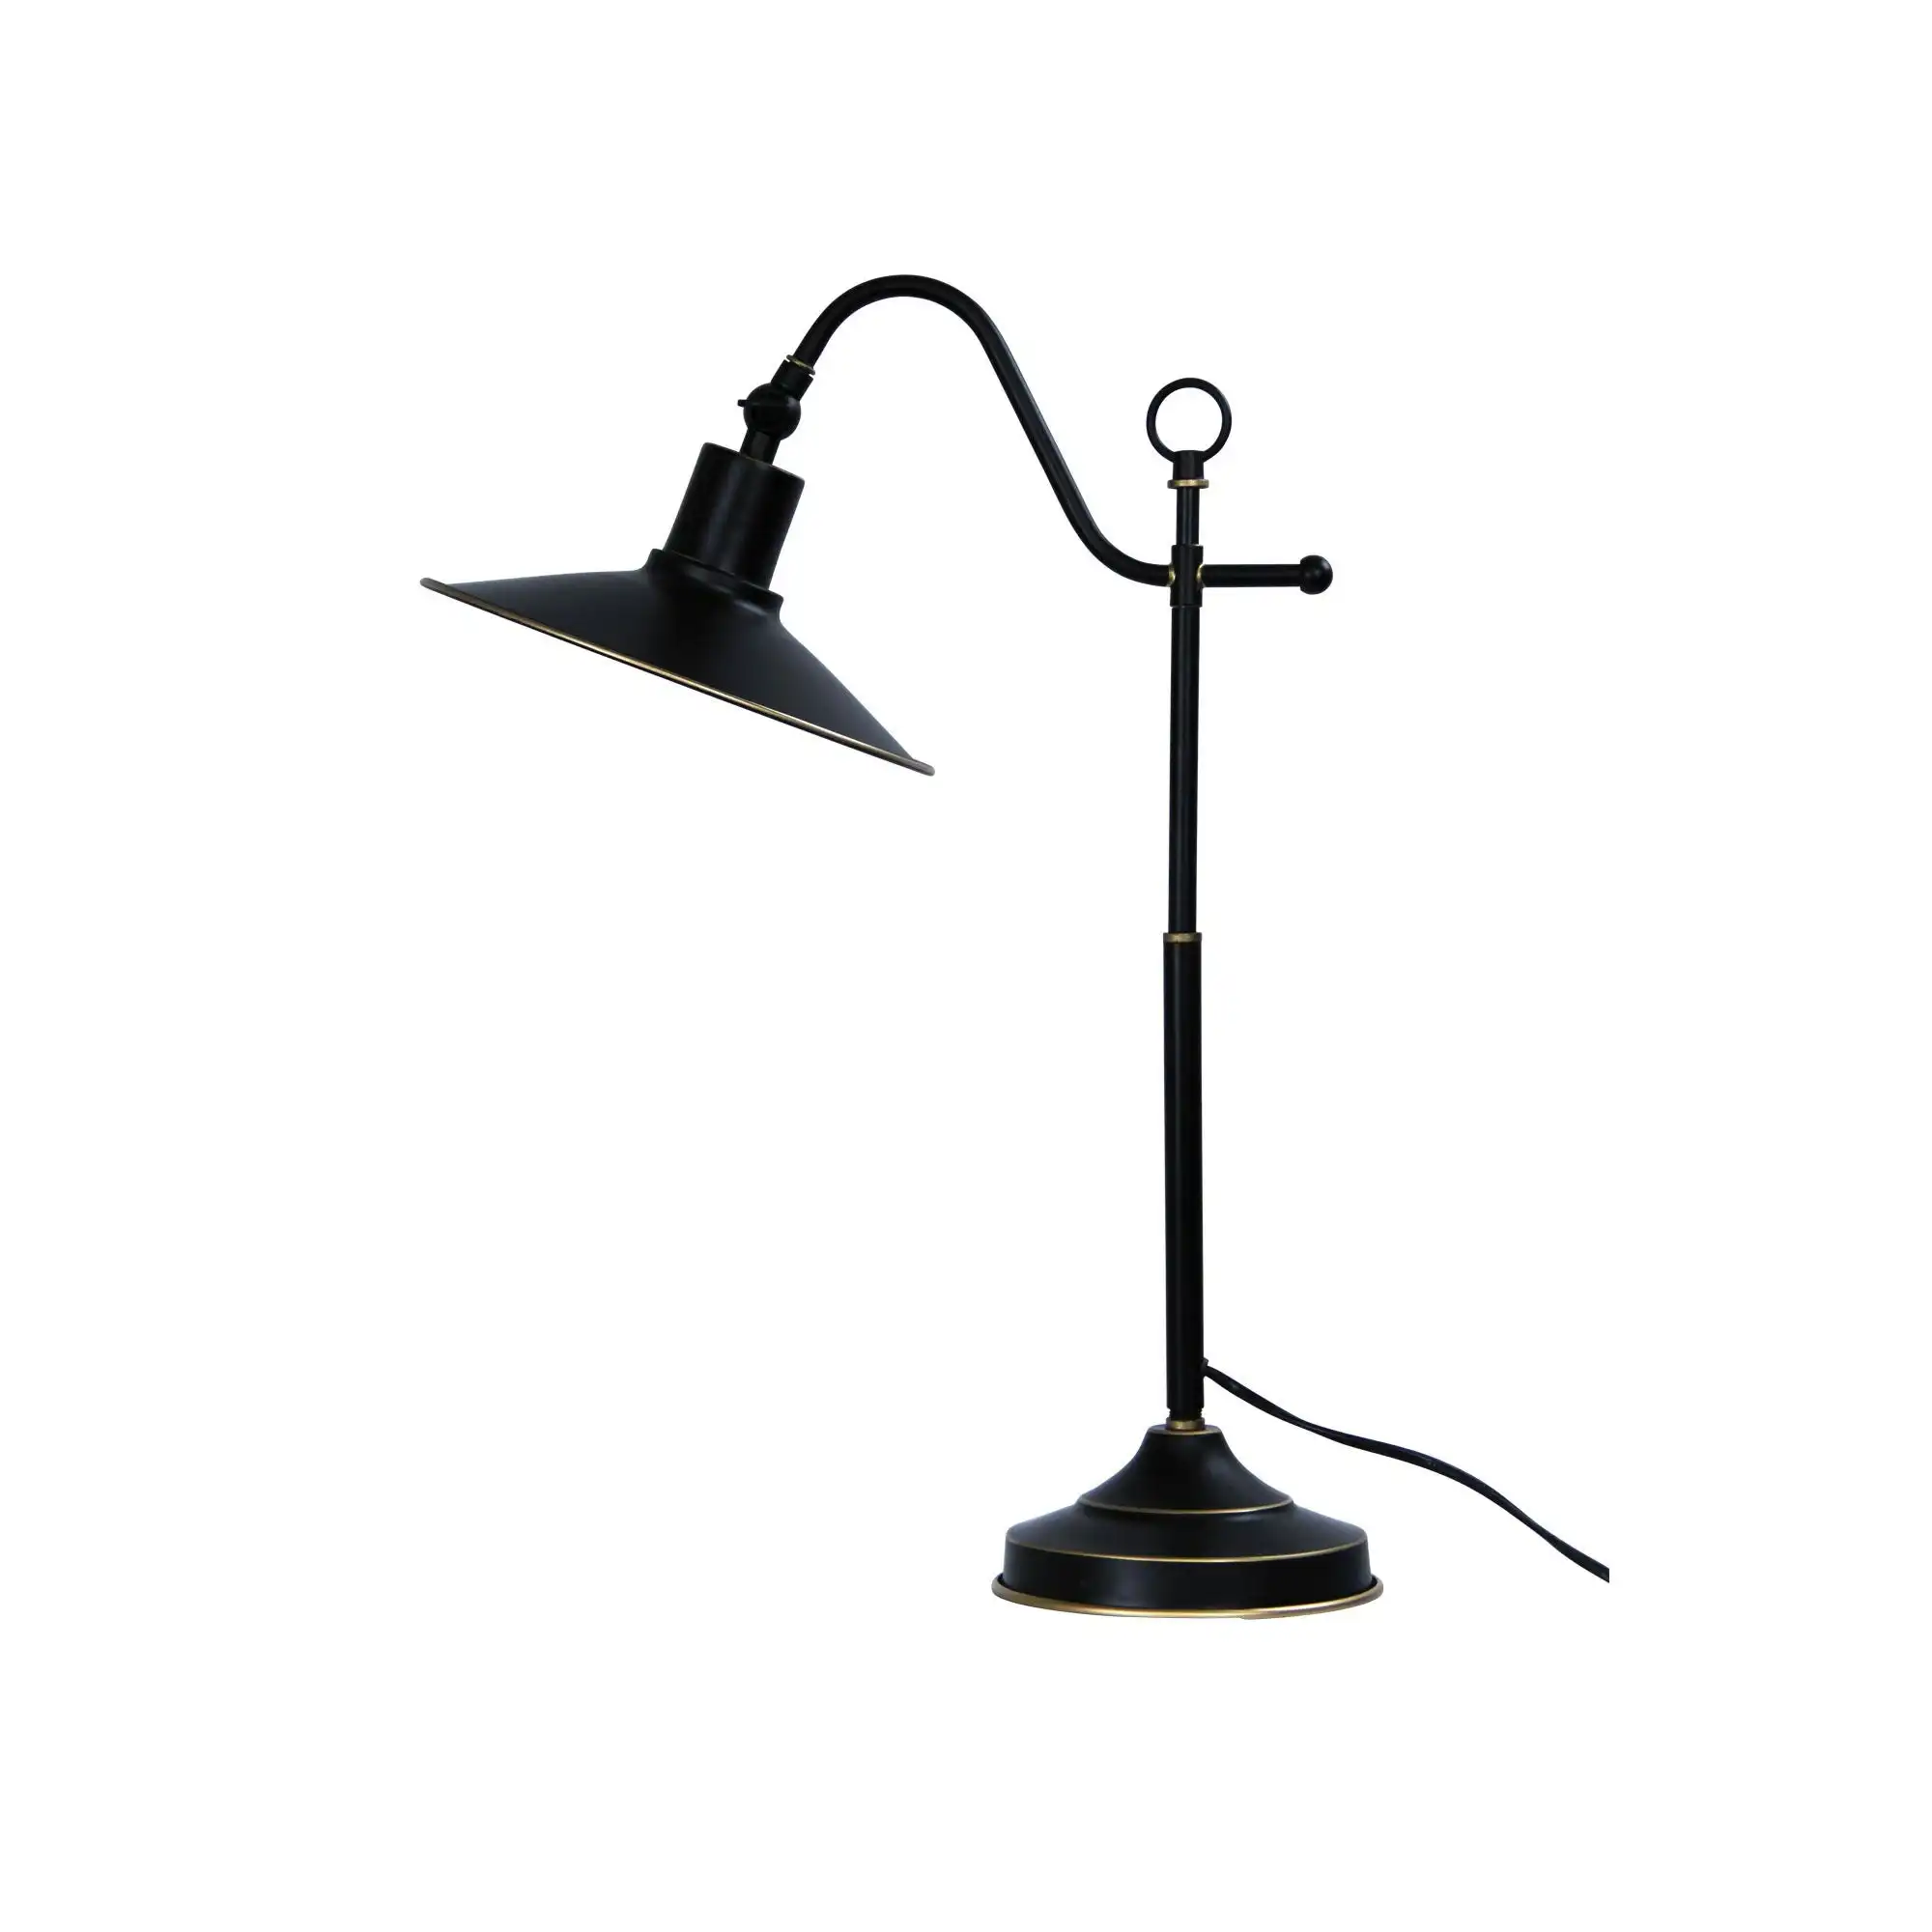 BOSTON TABLE LAMP Retro Insutrial Table or Desk Lamp